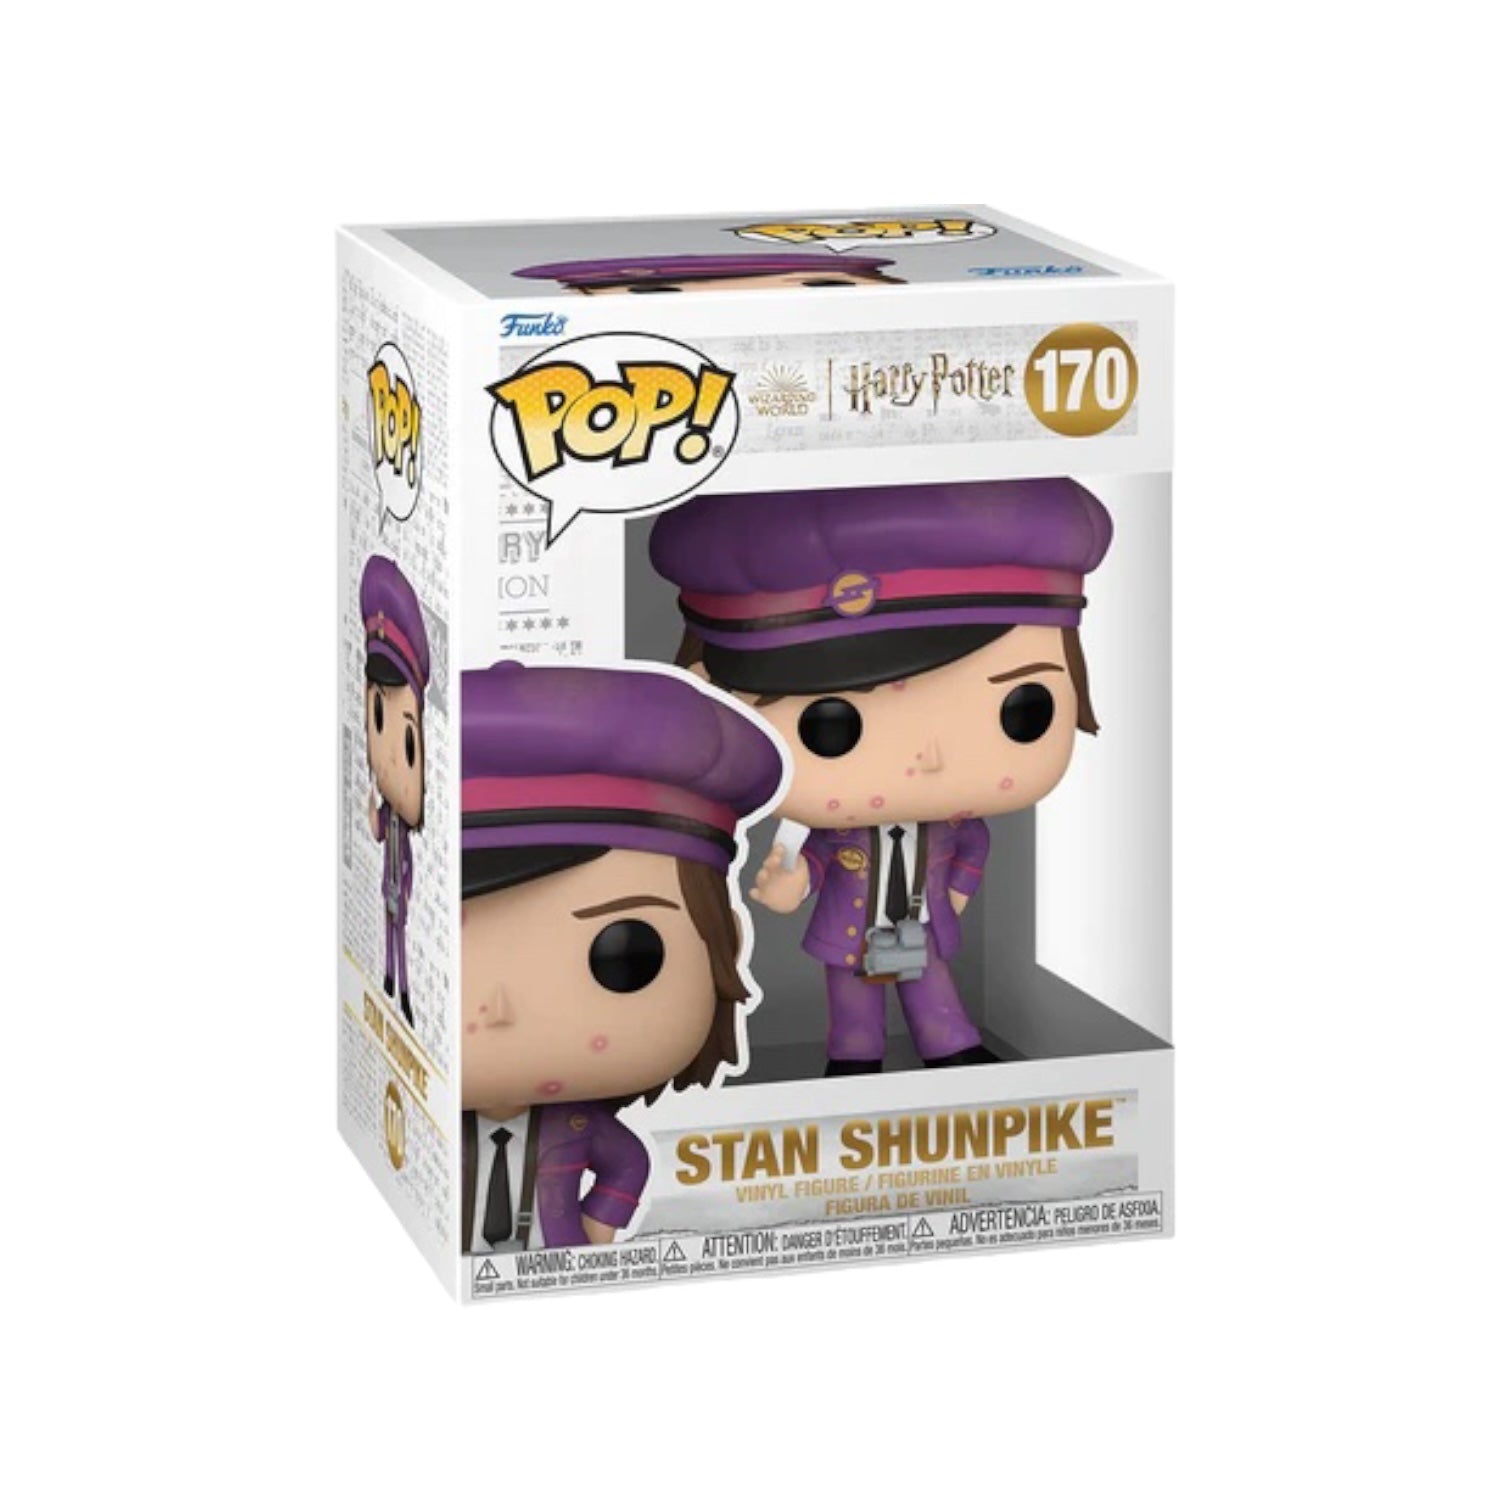 Stan Shunpike #170 Funko Pop! Harry Potter - PREORDER